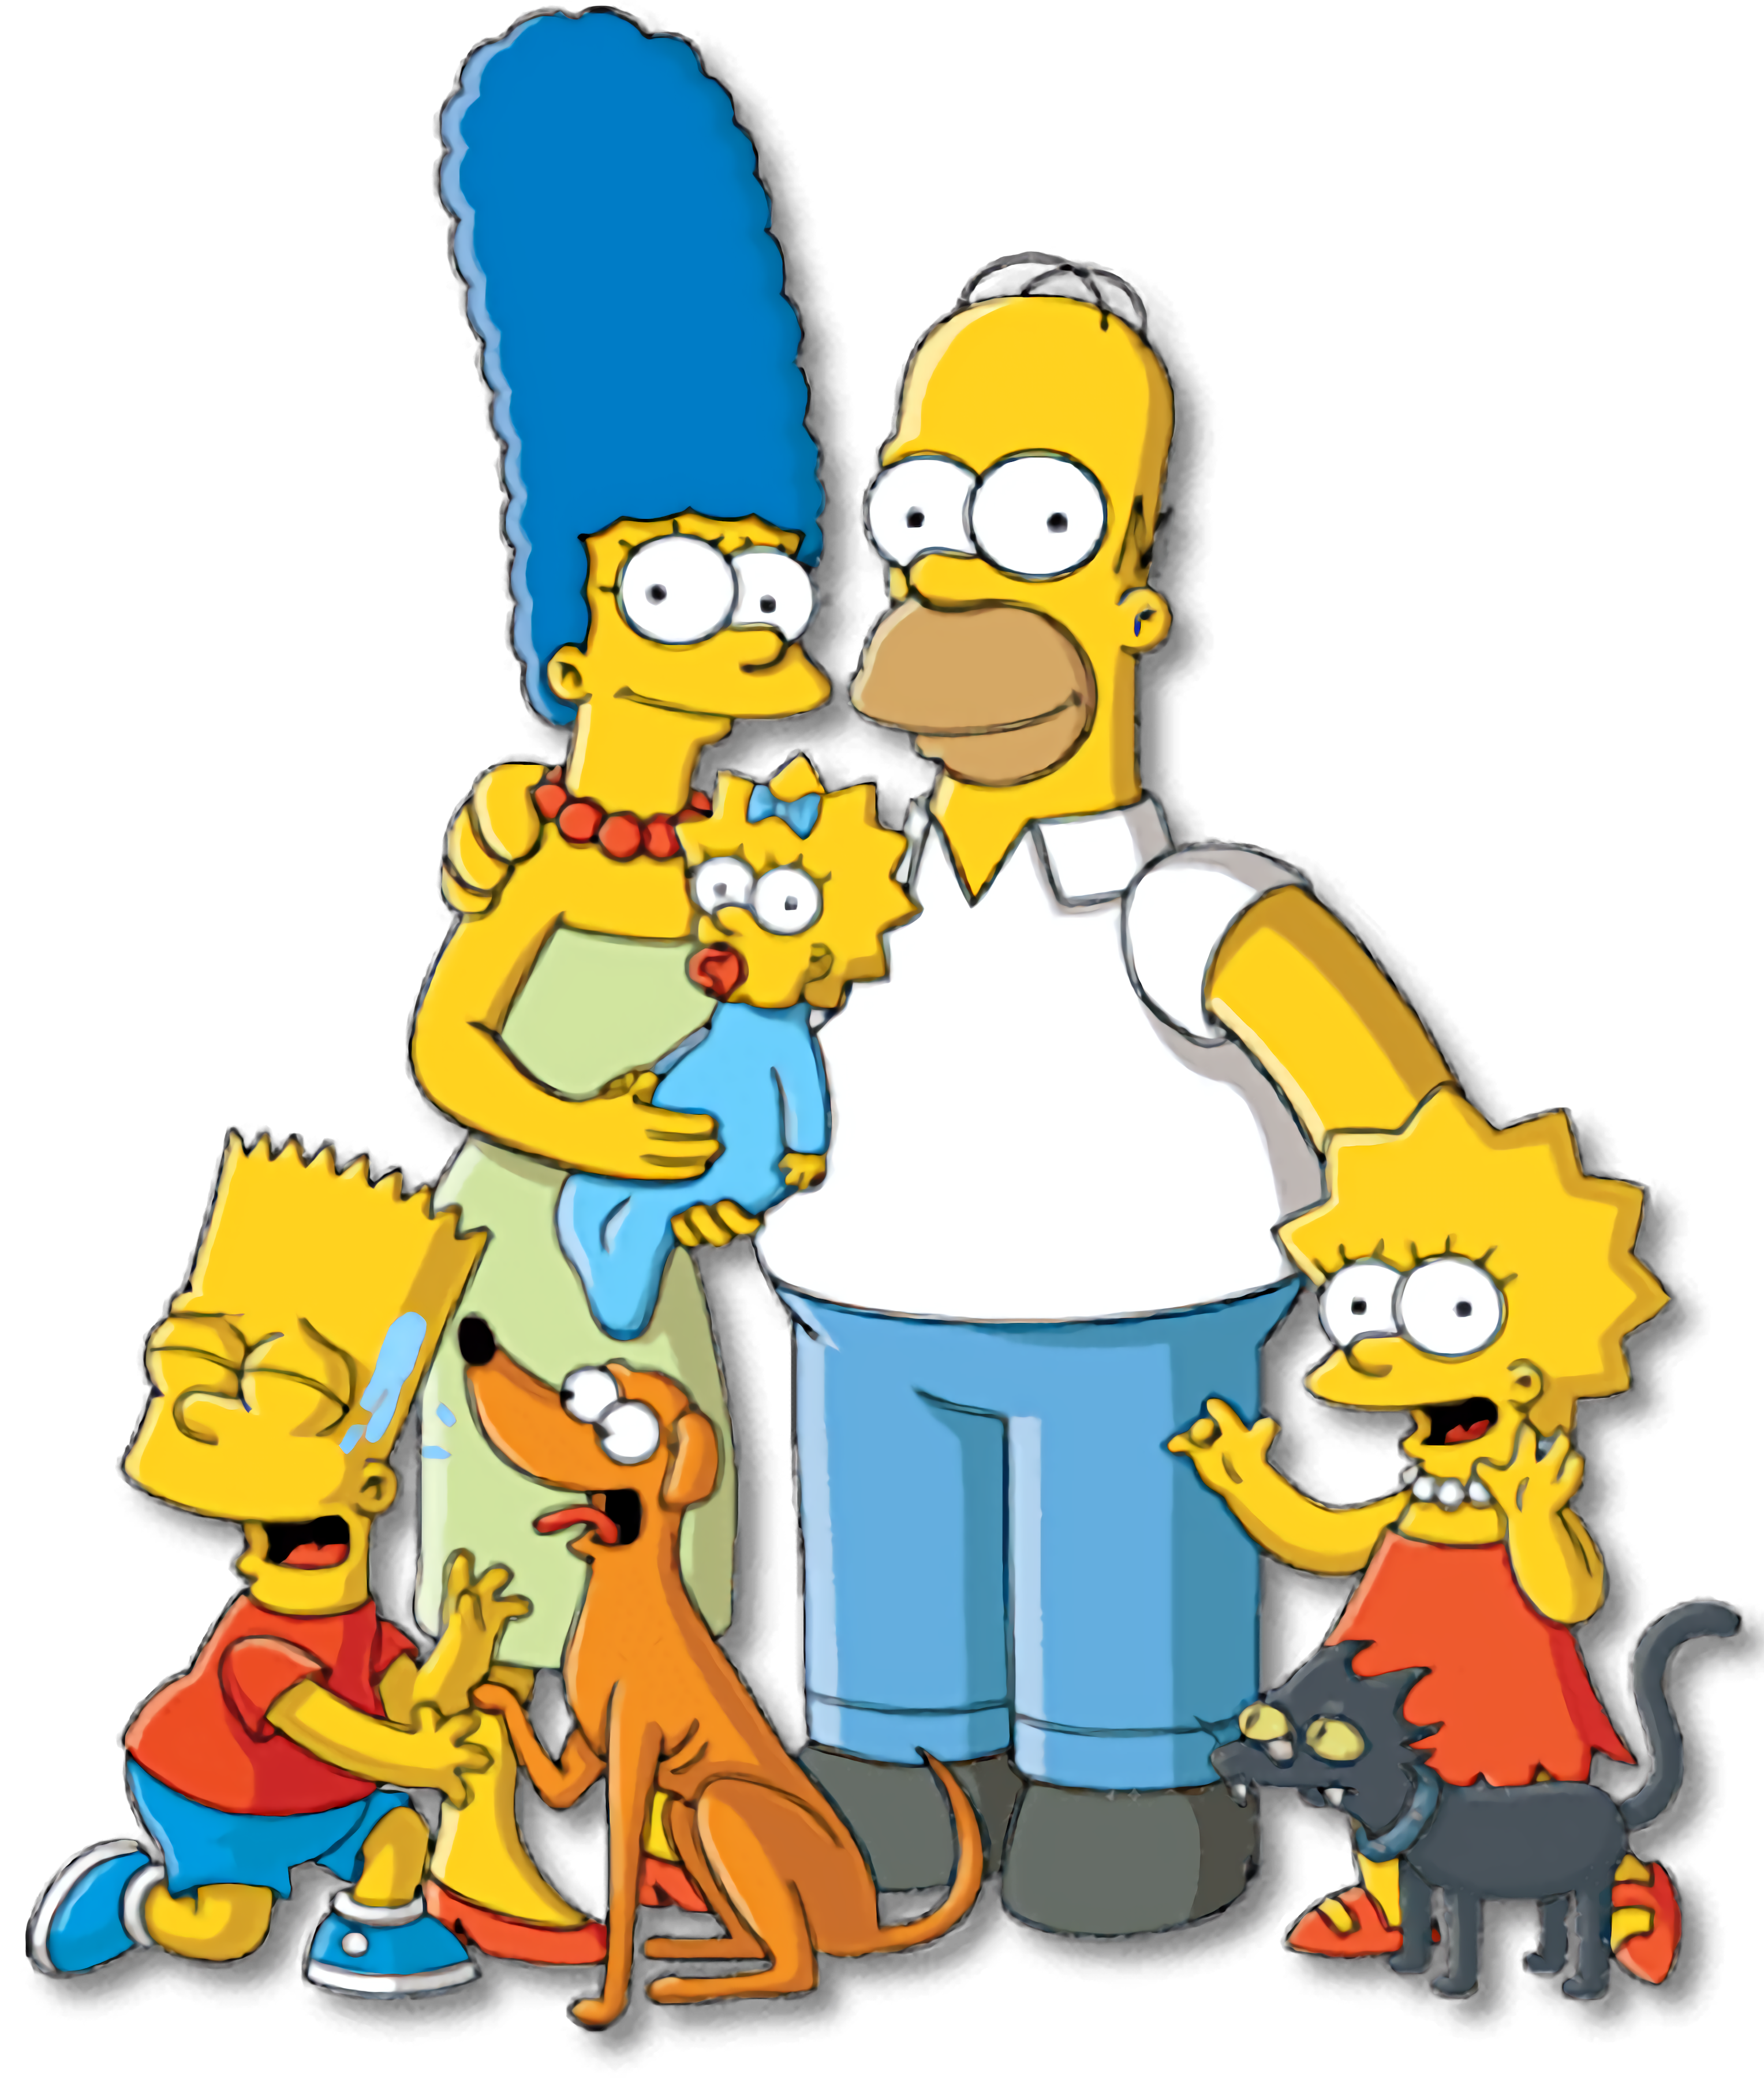 Simpsons Oyunları